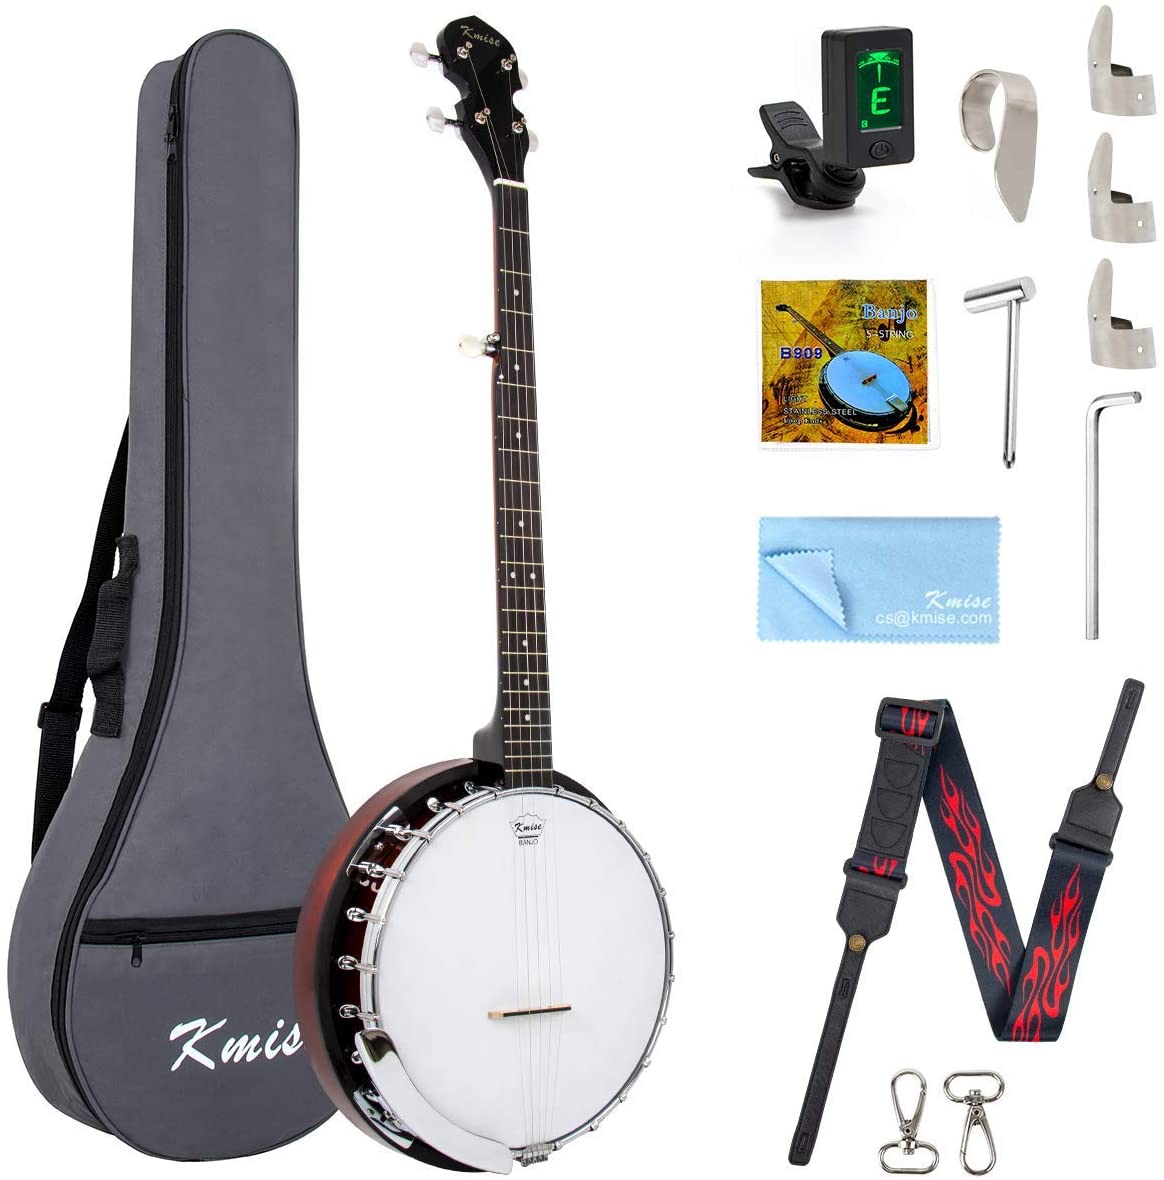 Kmise 5 String Resonator Banjo Professional Sapele Back Banjos Starter Kit With Bag Tuner Strap Strings Pickup Picks Ruler Wrench Bridge - AKLOT